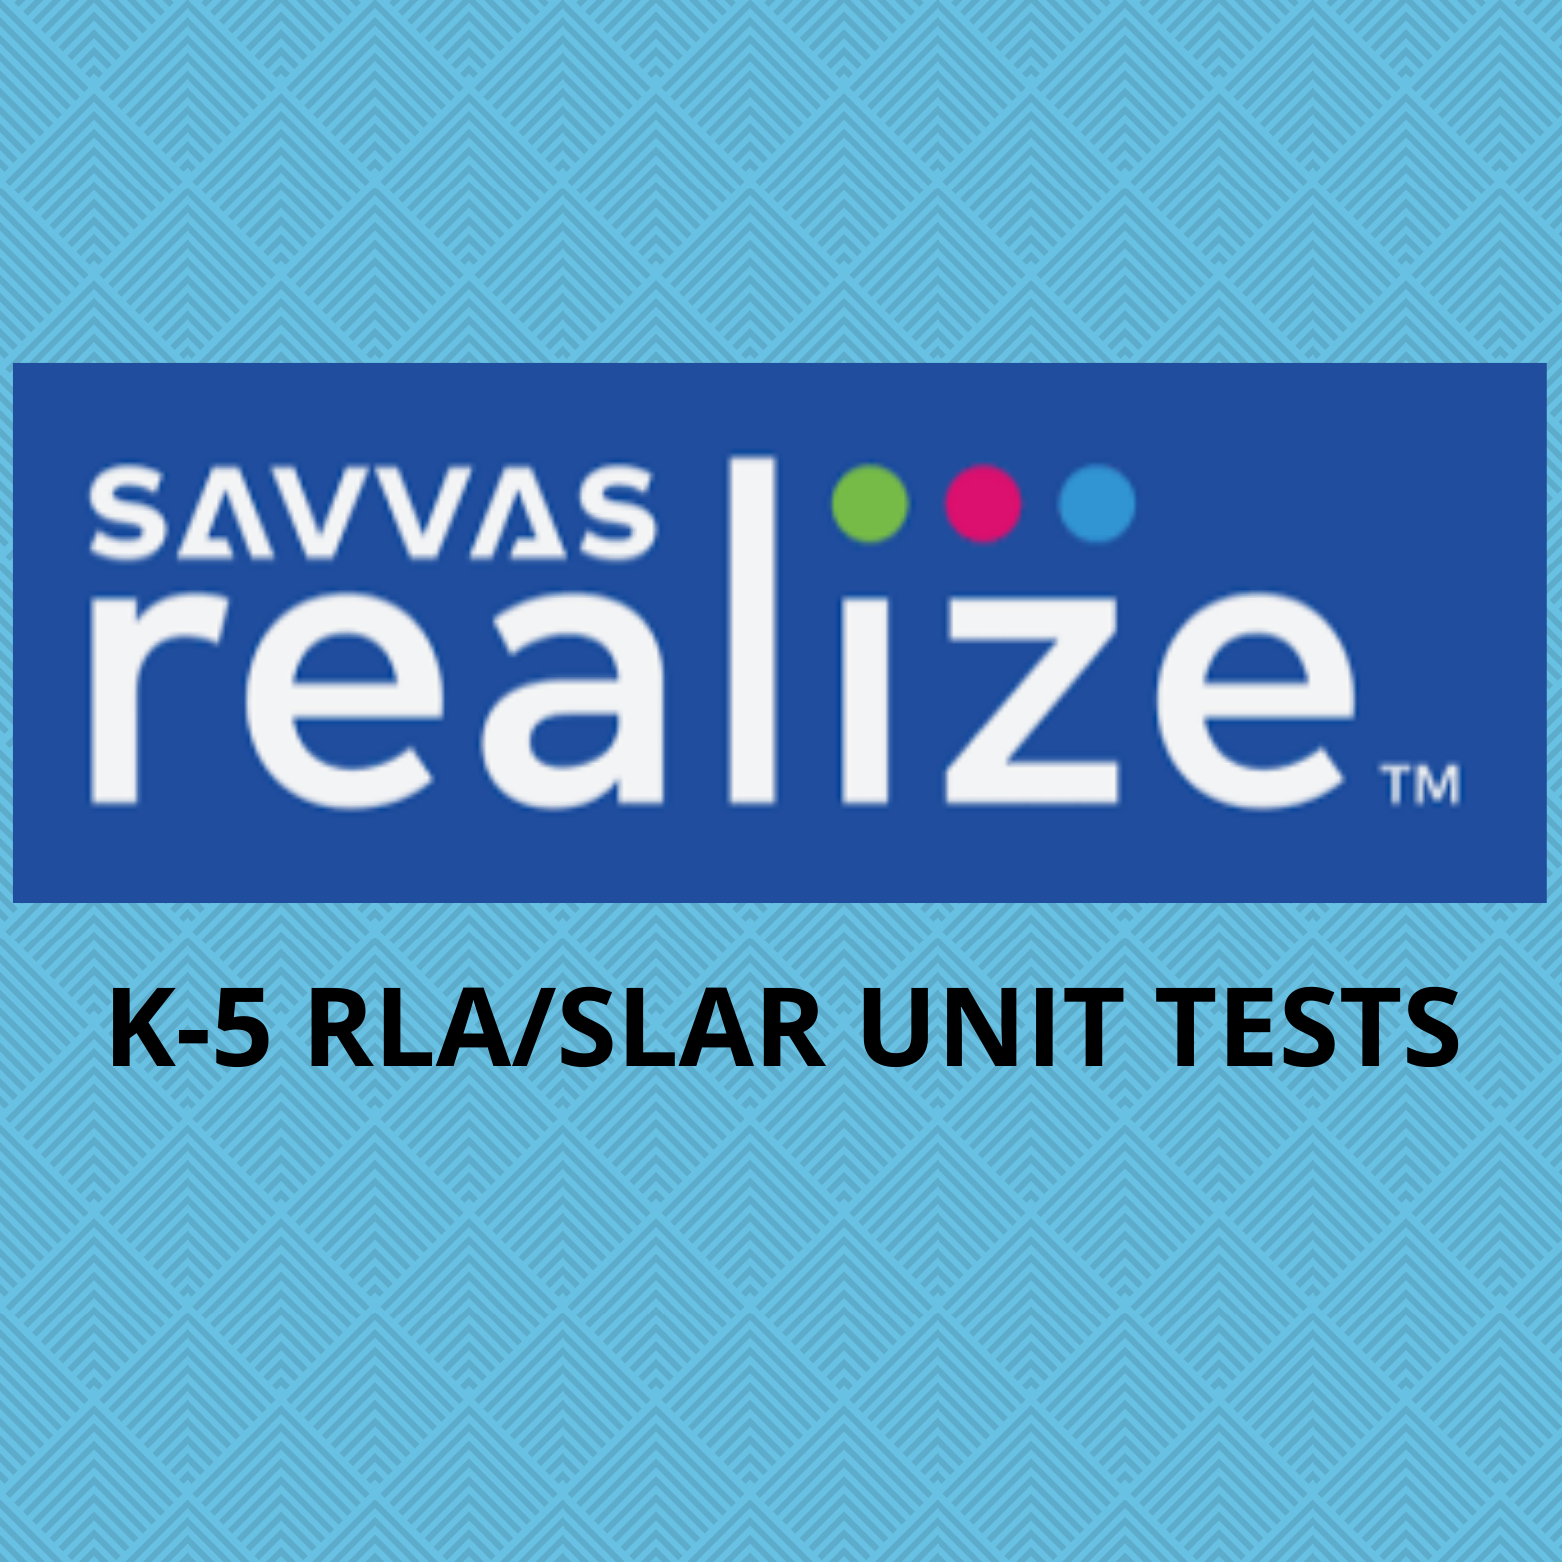 savvas rla/slar tests